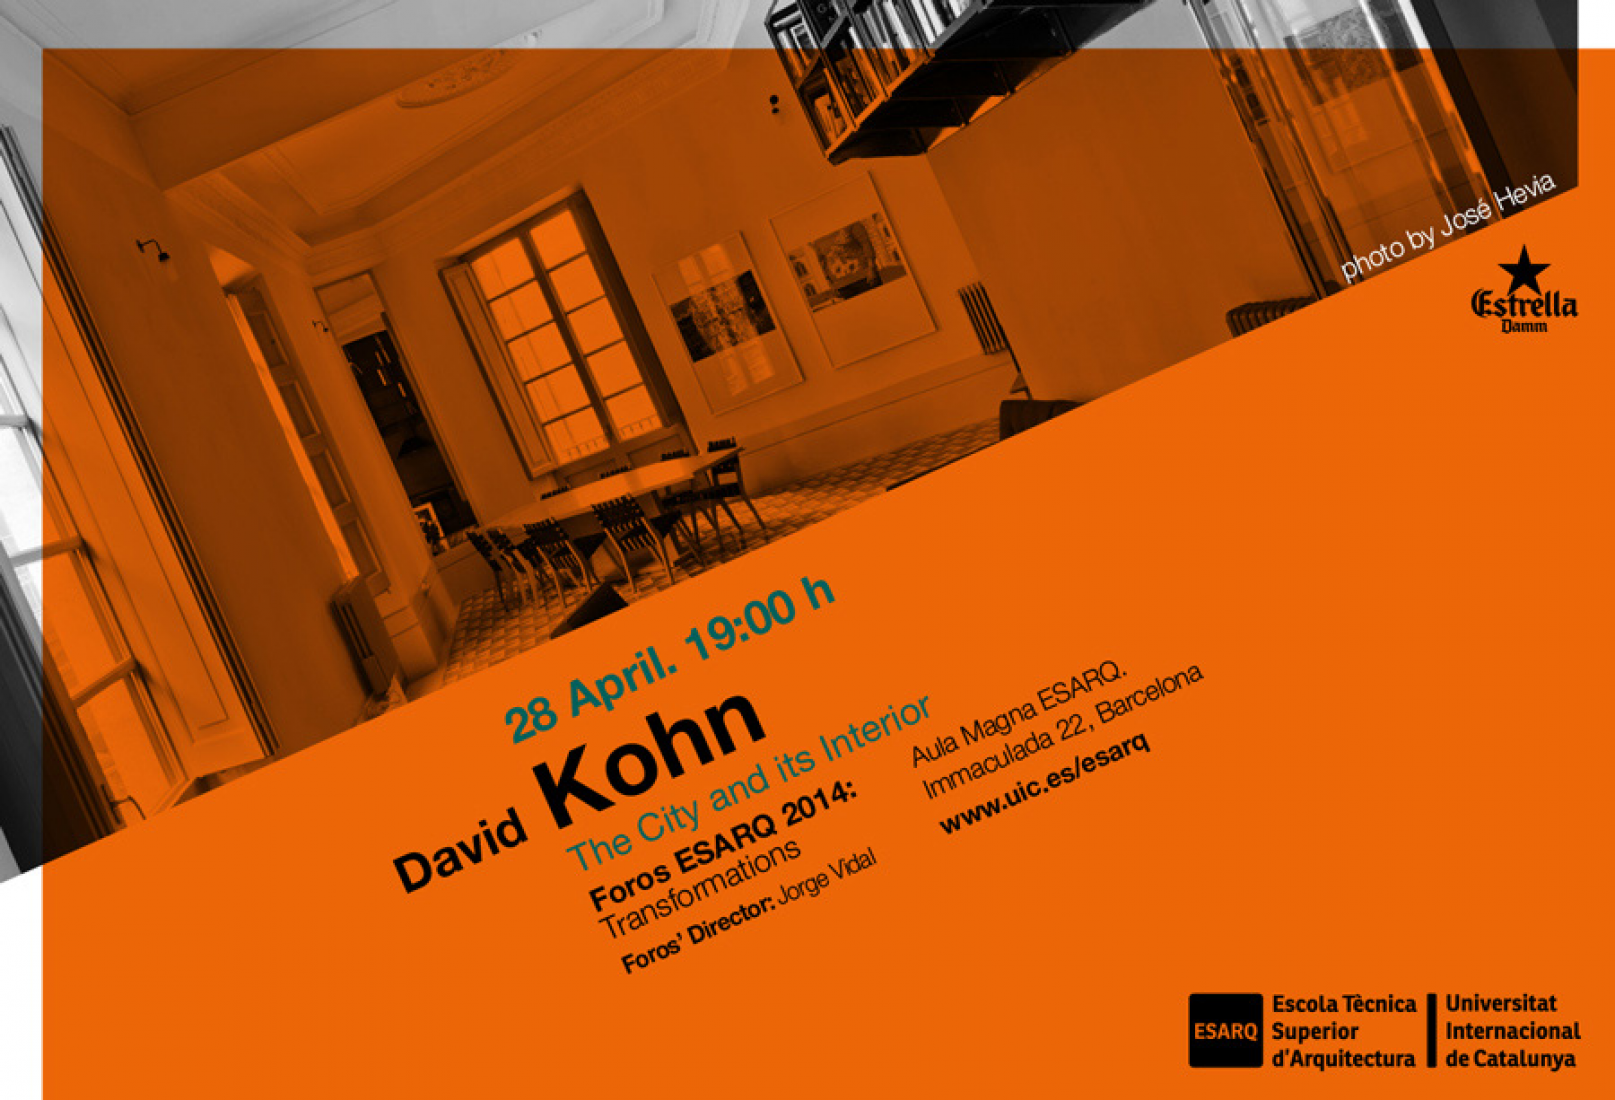 David Kohn. Cartel conferencia. “Foros Esarq 2014: Transformations”. 